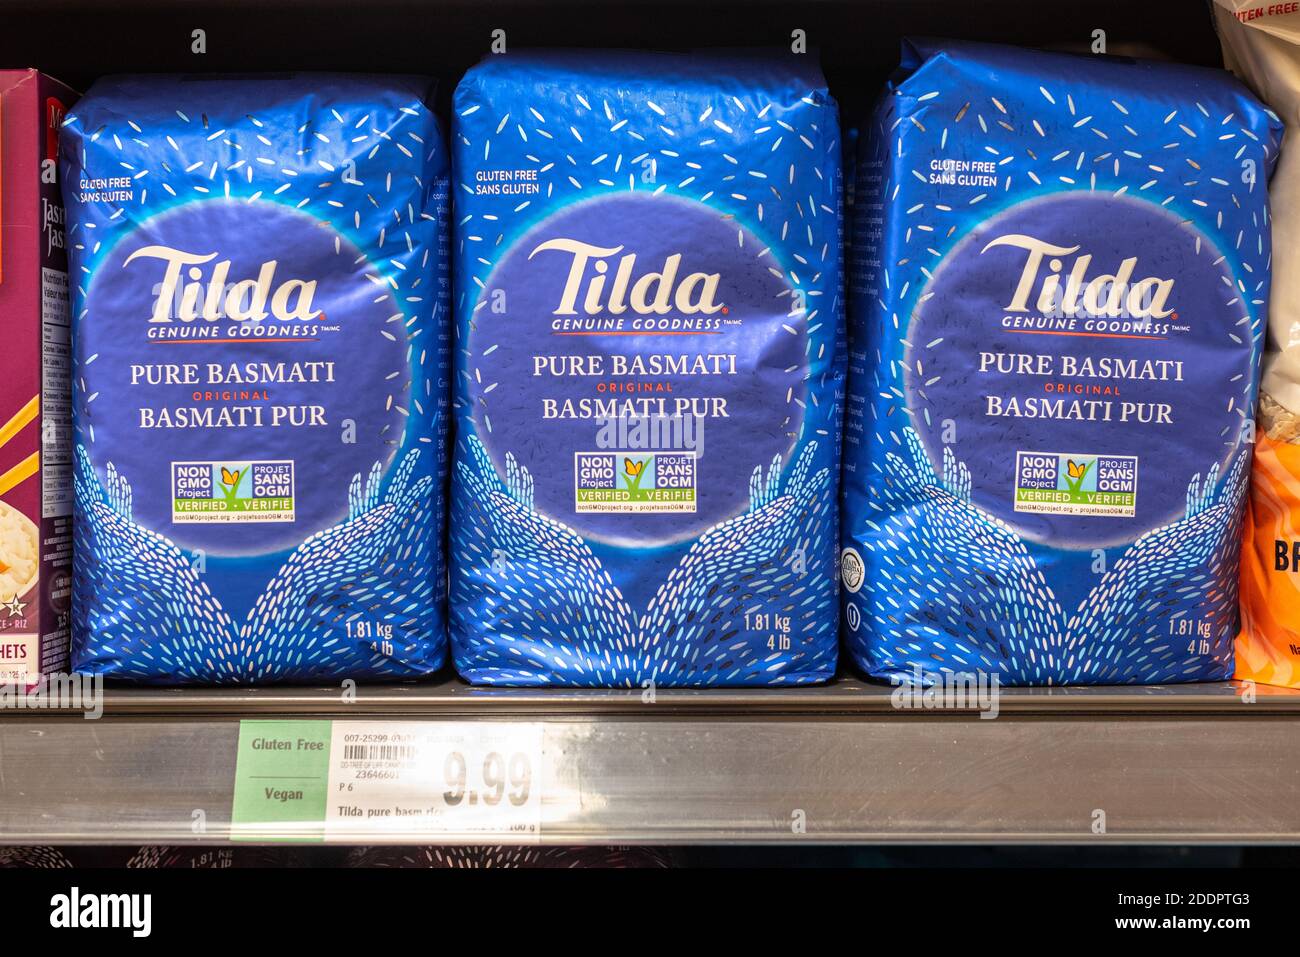 Non-GMO basmati rice branded Tilda seen on a store shelf Stock Photo